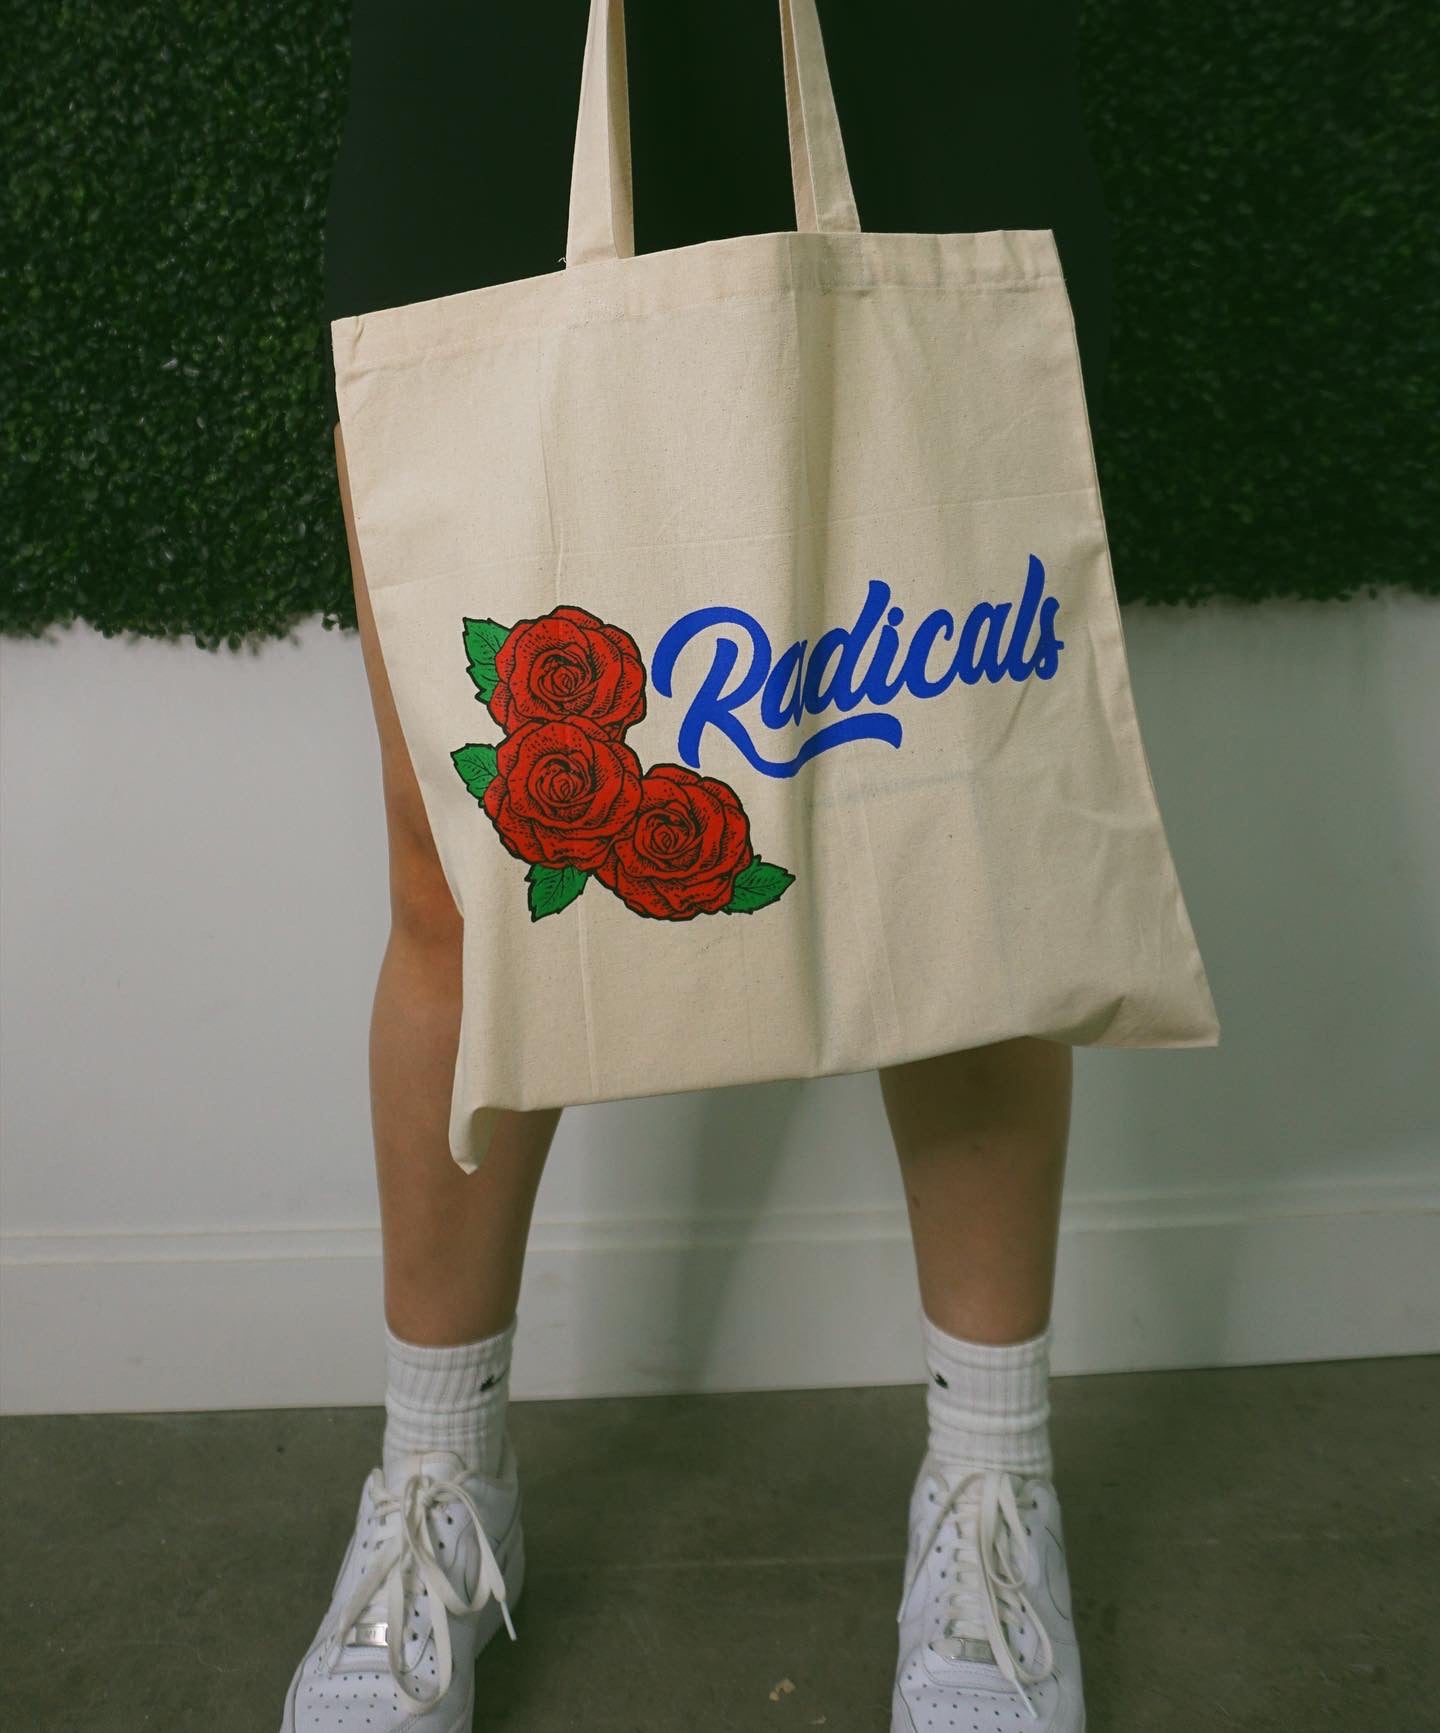 Radicals book bag